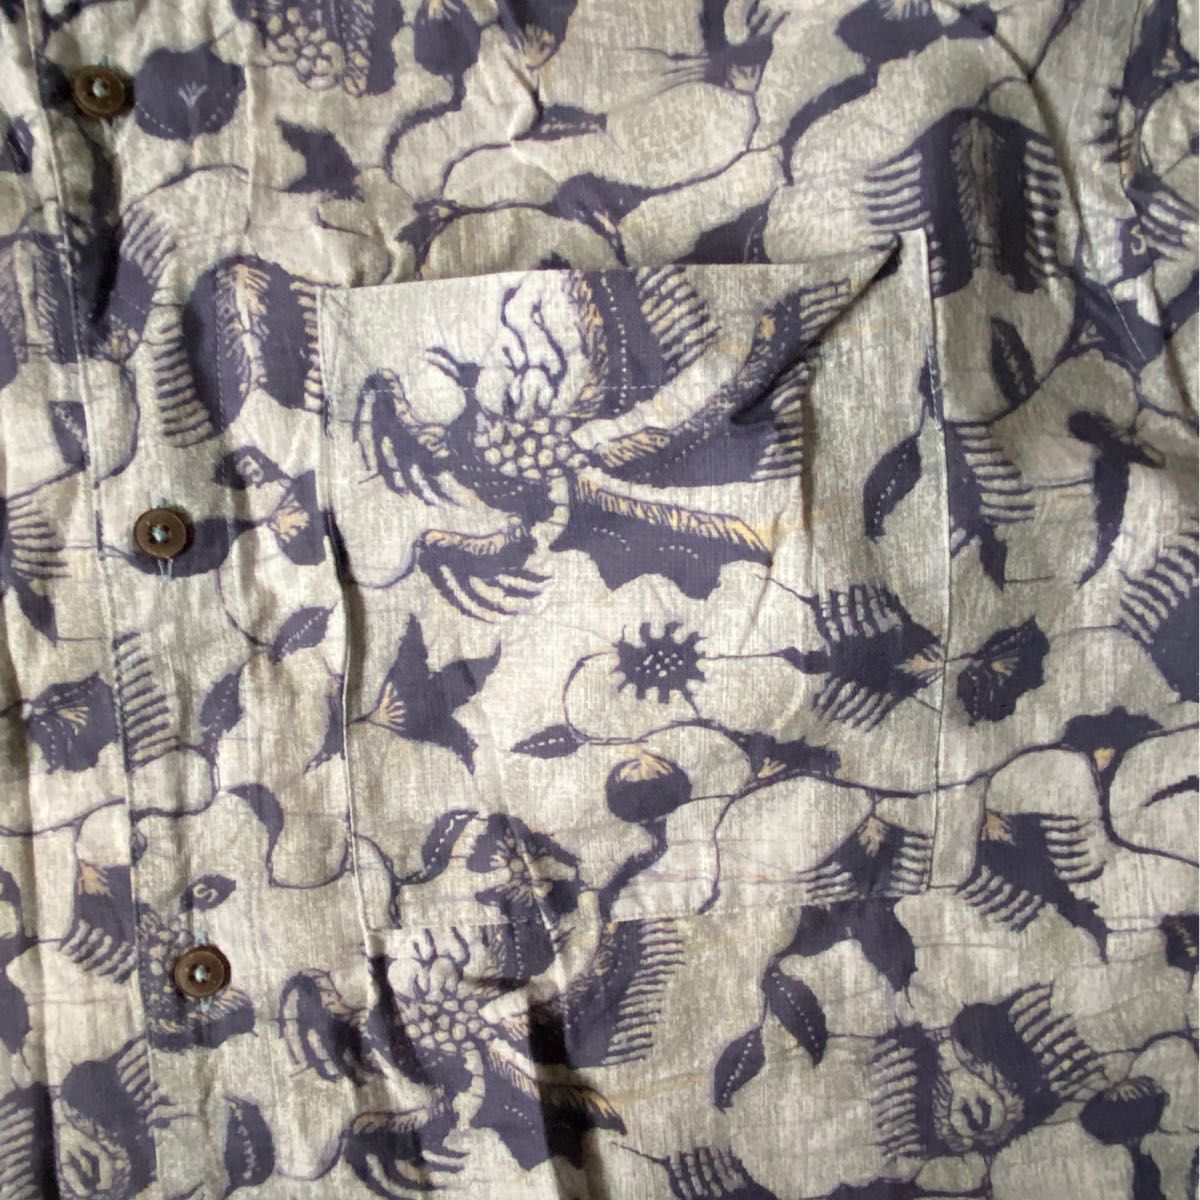 Patagonia 2002年製 アロハシャツ 美品 パタゴニア レア ビンテージシャツ パタロハ